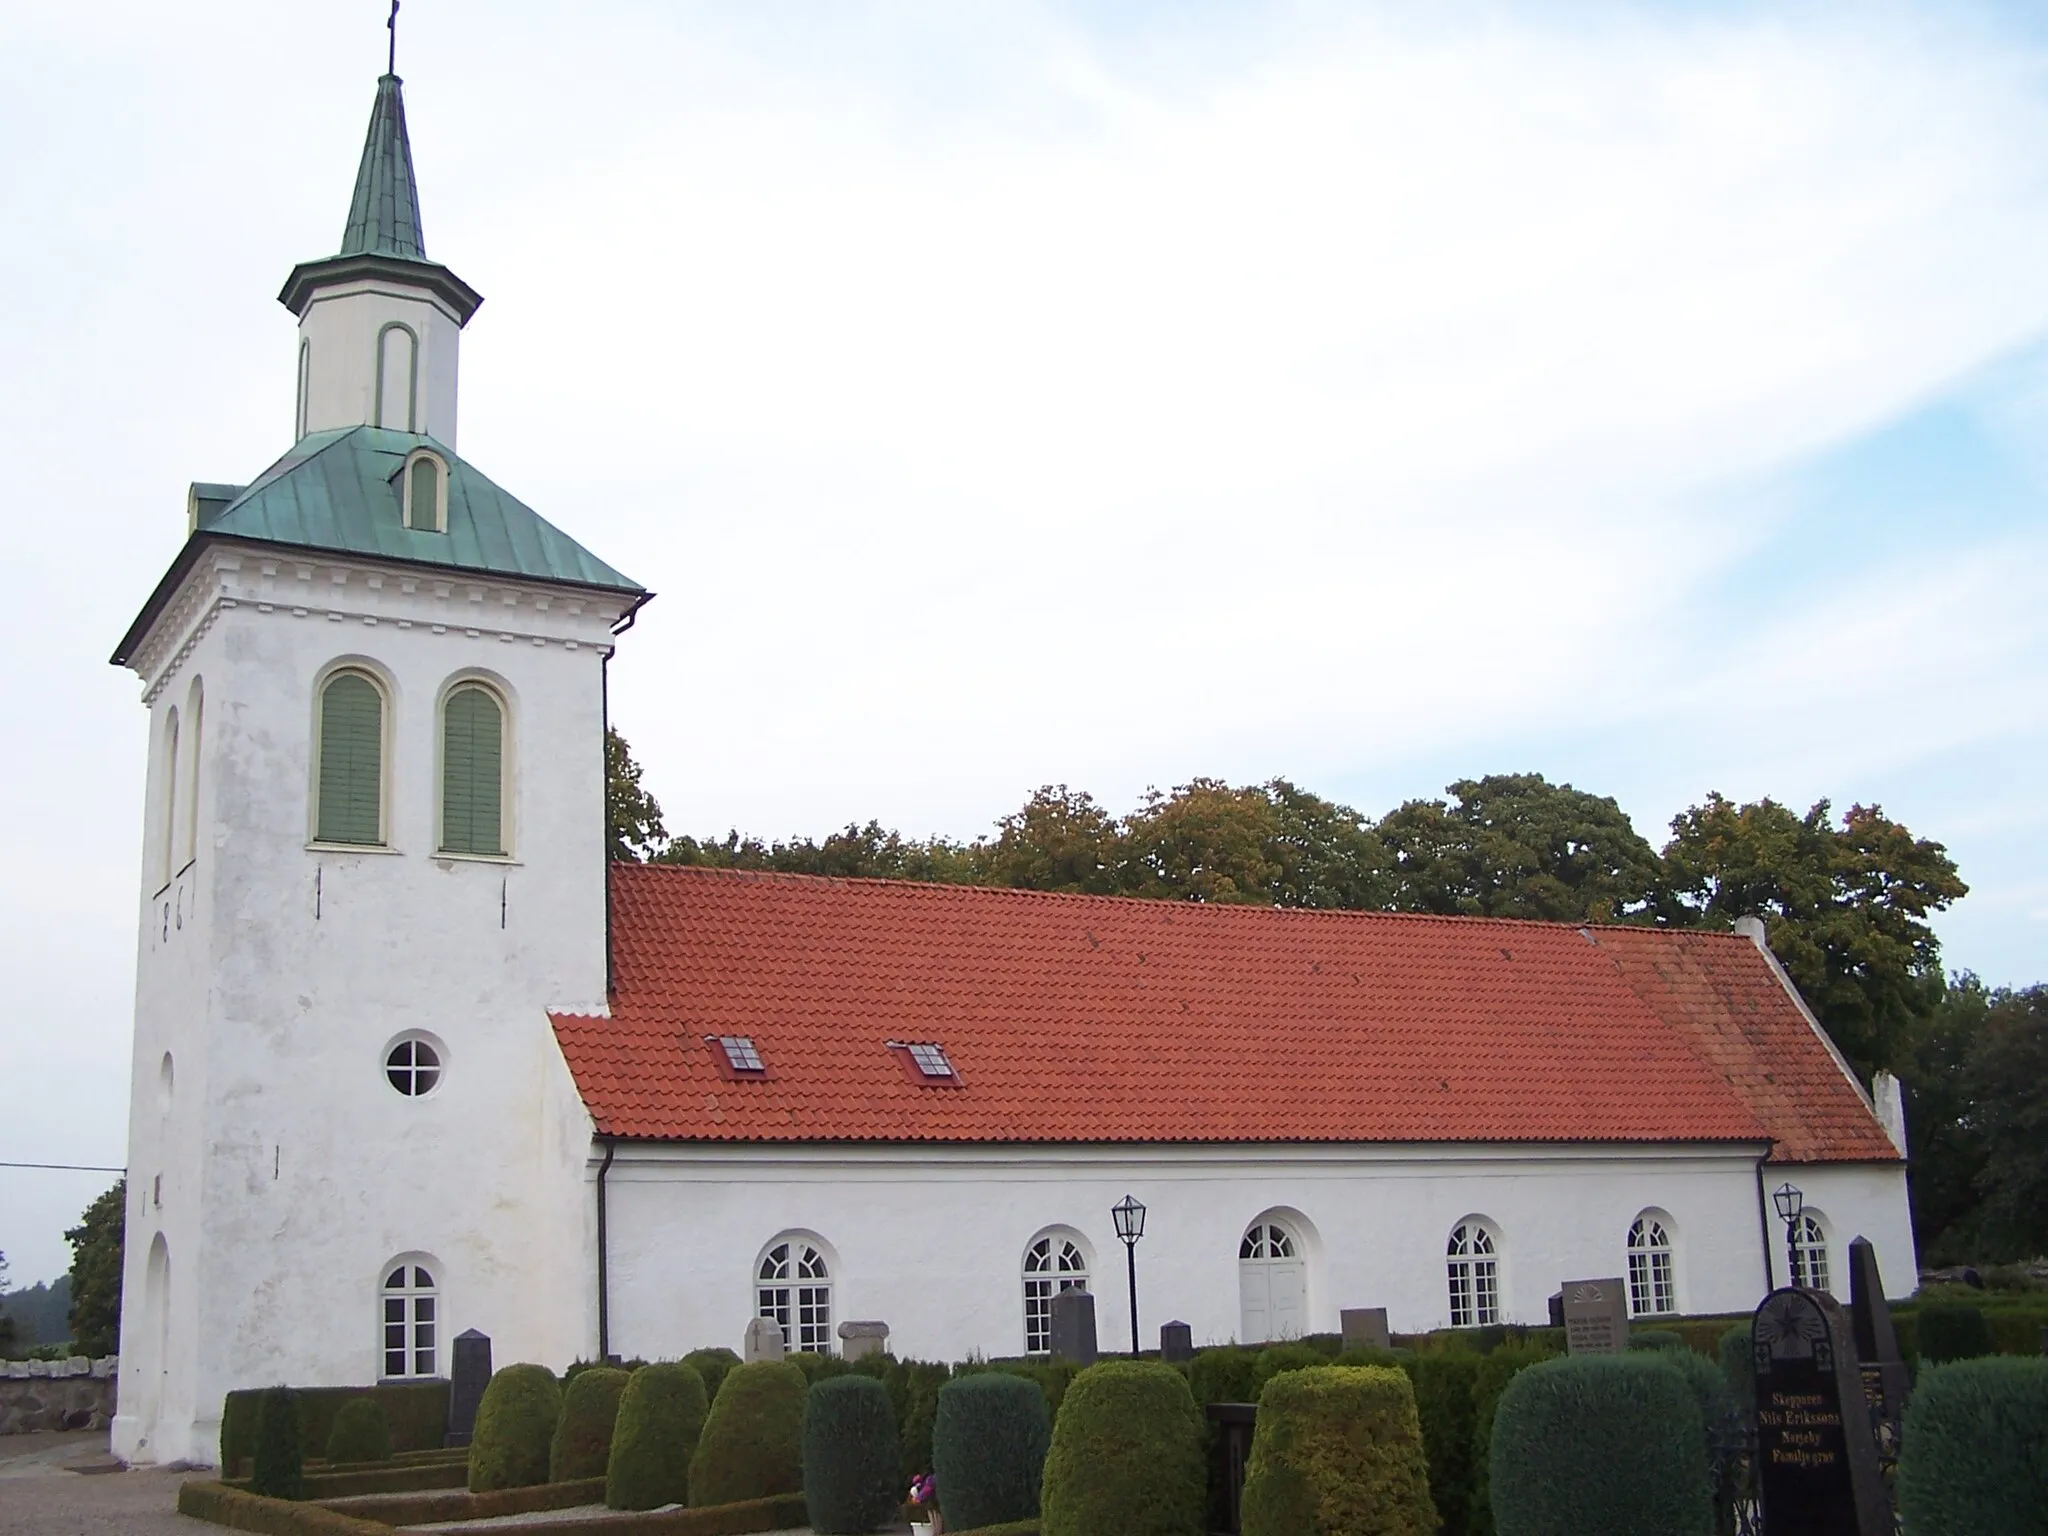 Photo showing: Ysane church, near Sölvesborg, Sweden.